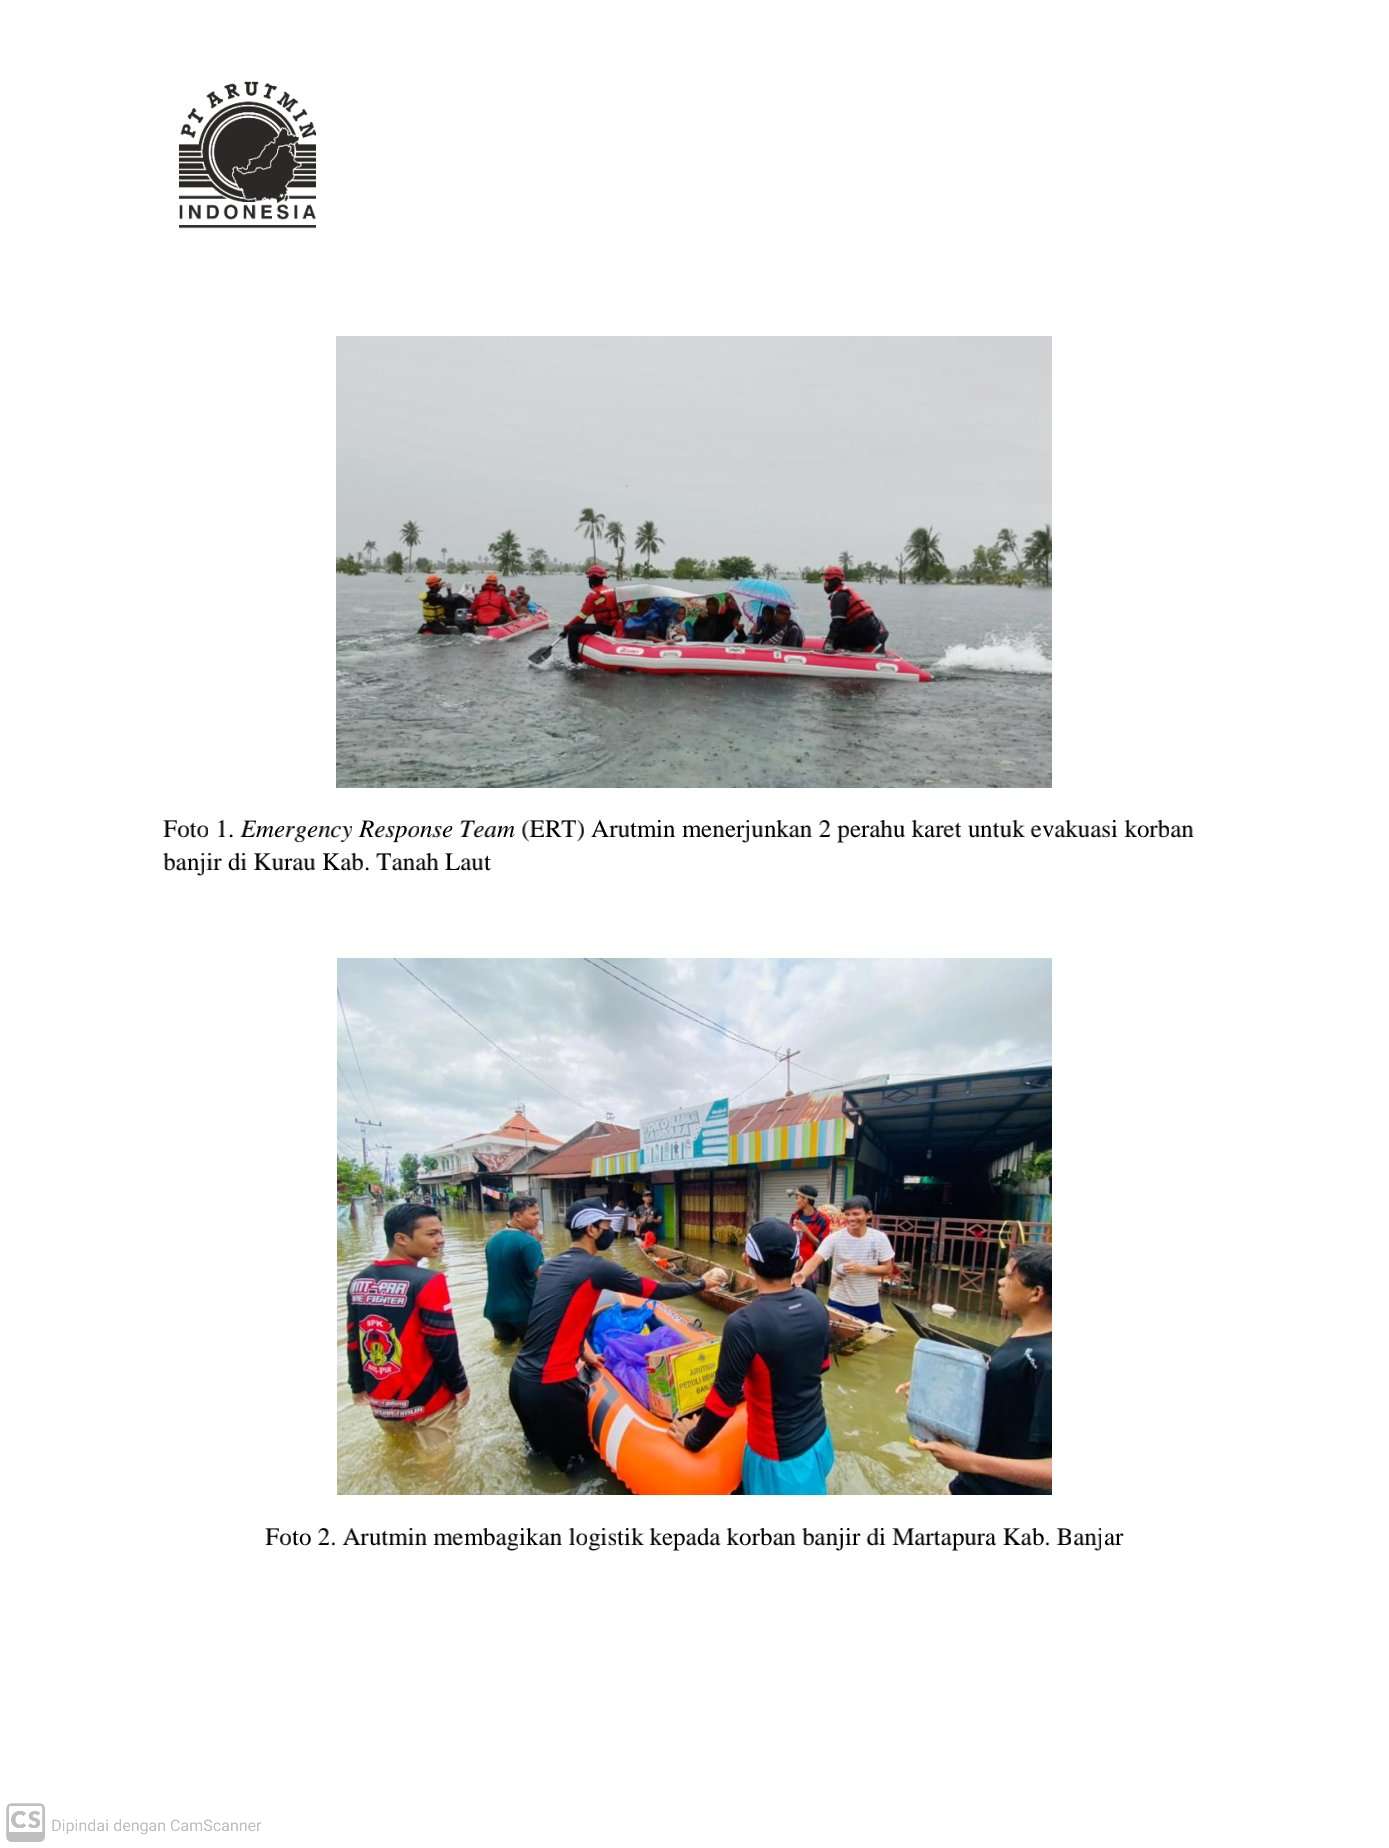 Arutmin Bergerak Ditengah Banjir, Rabby; 112 Perusahaan Dikotabaru Agar Bisa Bantu Korban Banjir